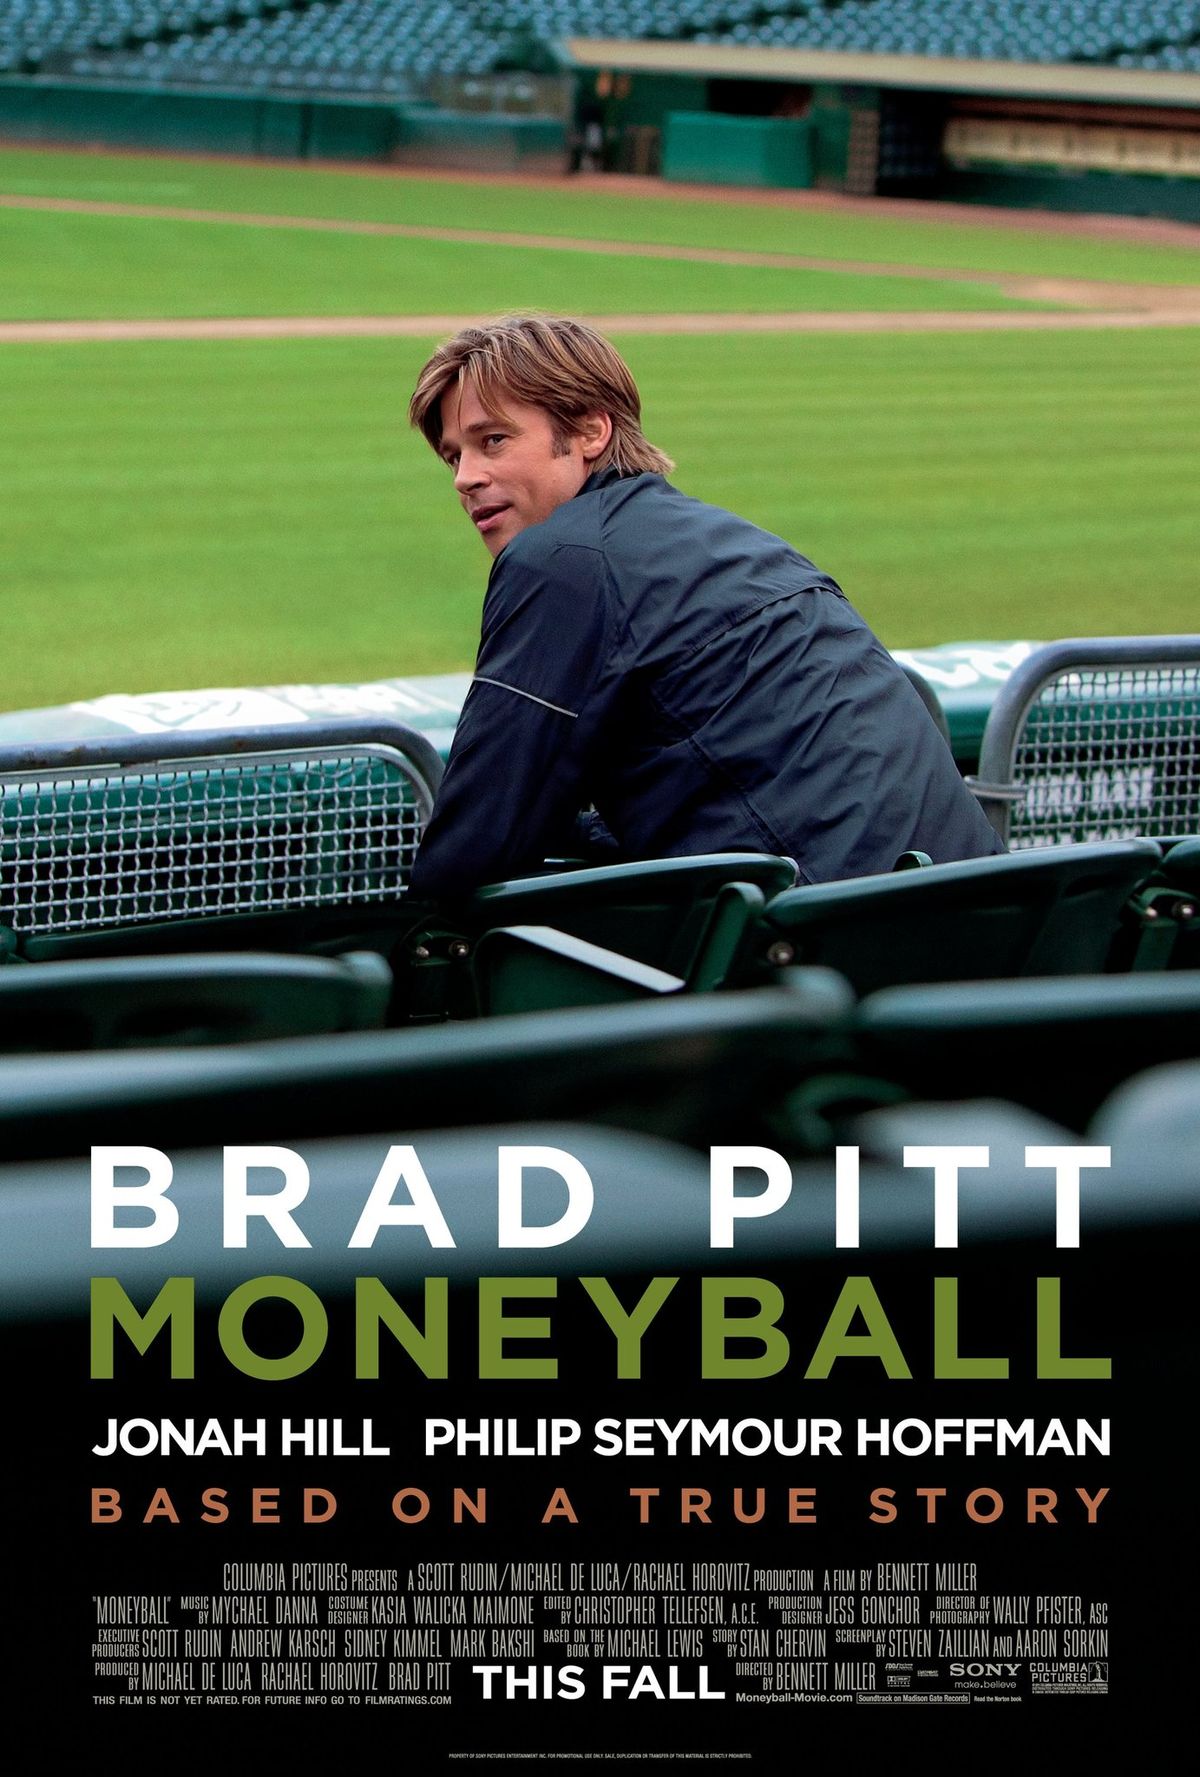 My Take on the Baseball Movie Masterpiece: Moneyball (2011)